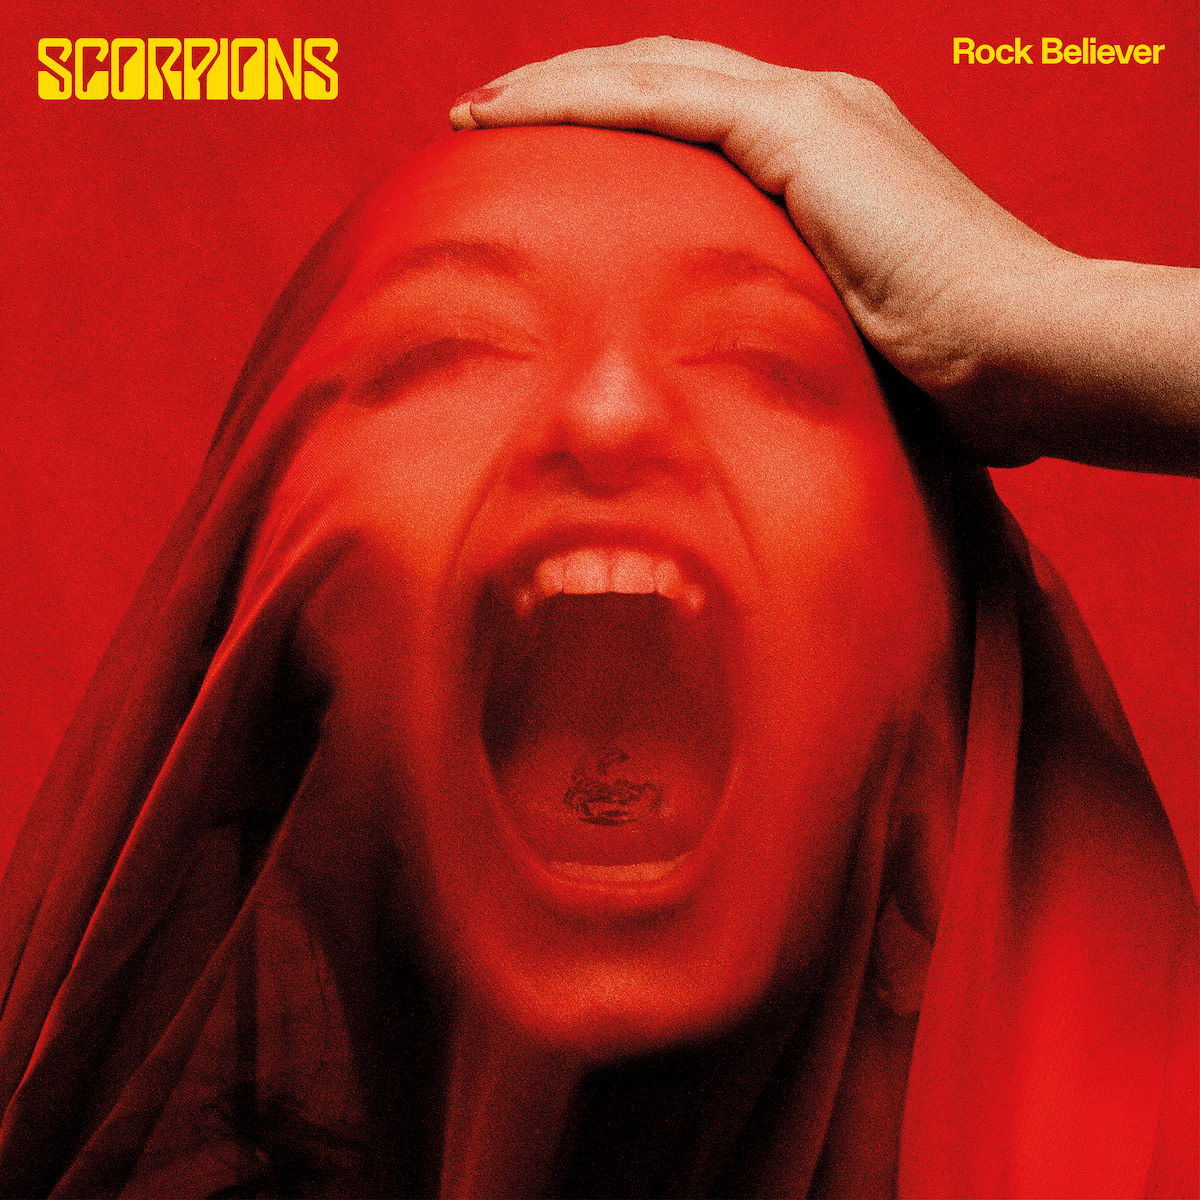 Scorpions_RockBeliever_Digital_Album_Cover copy